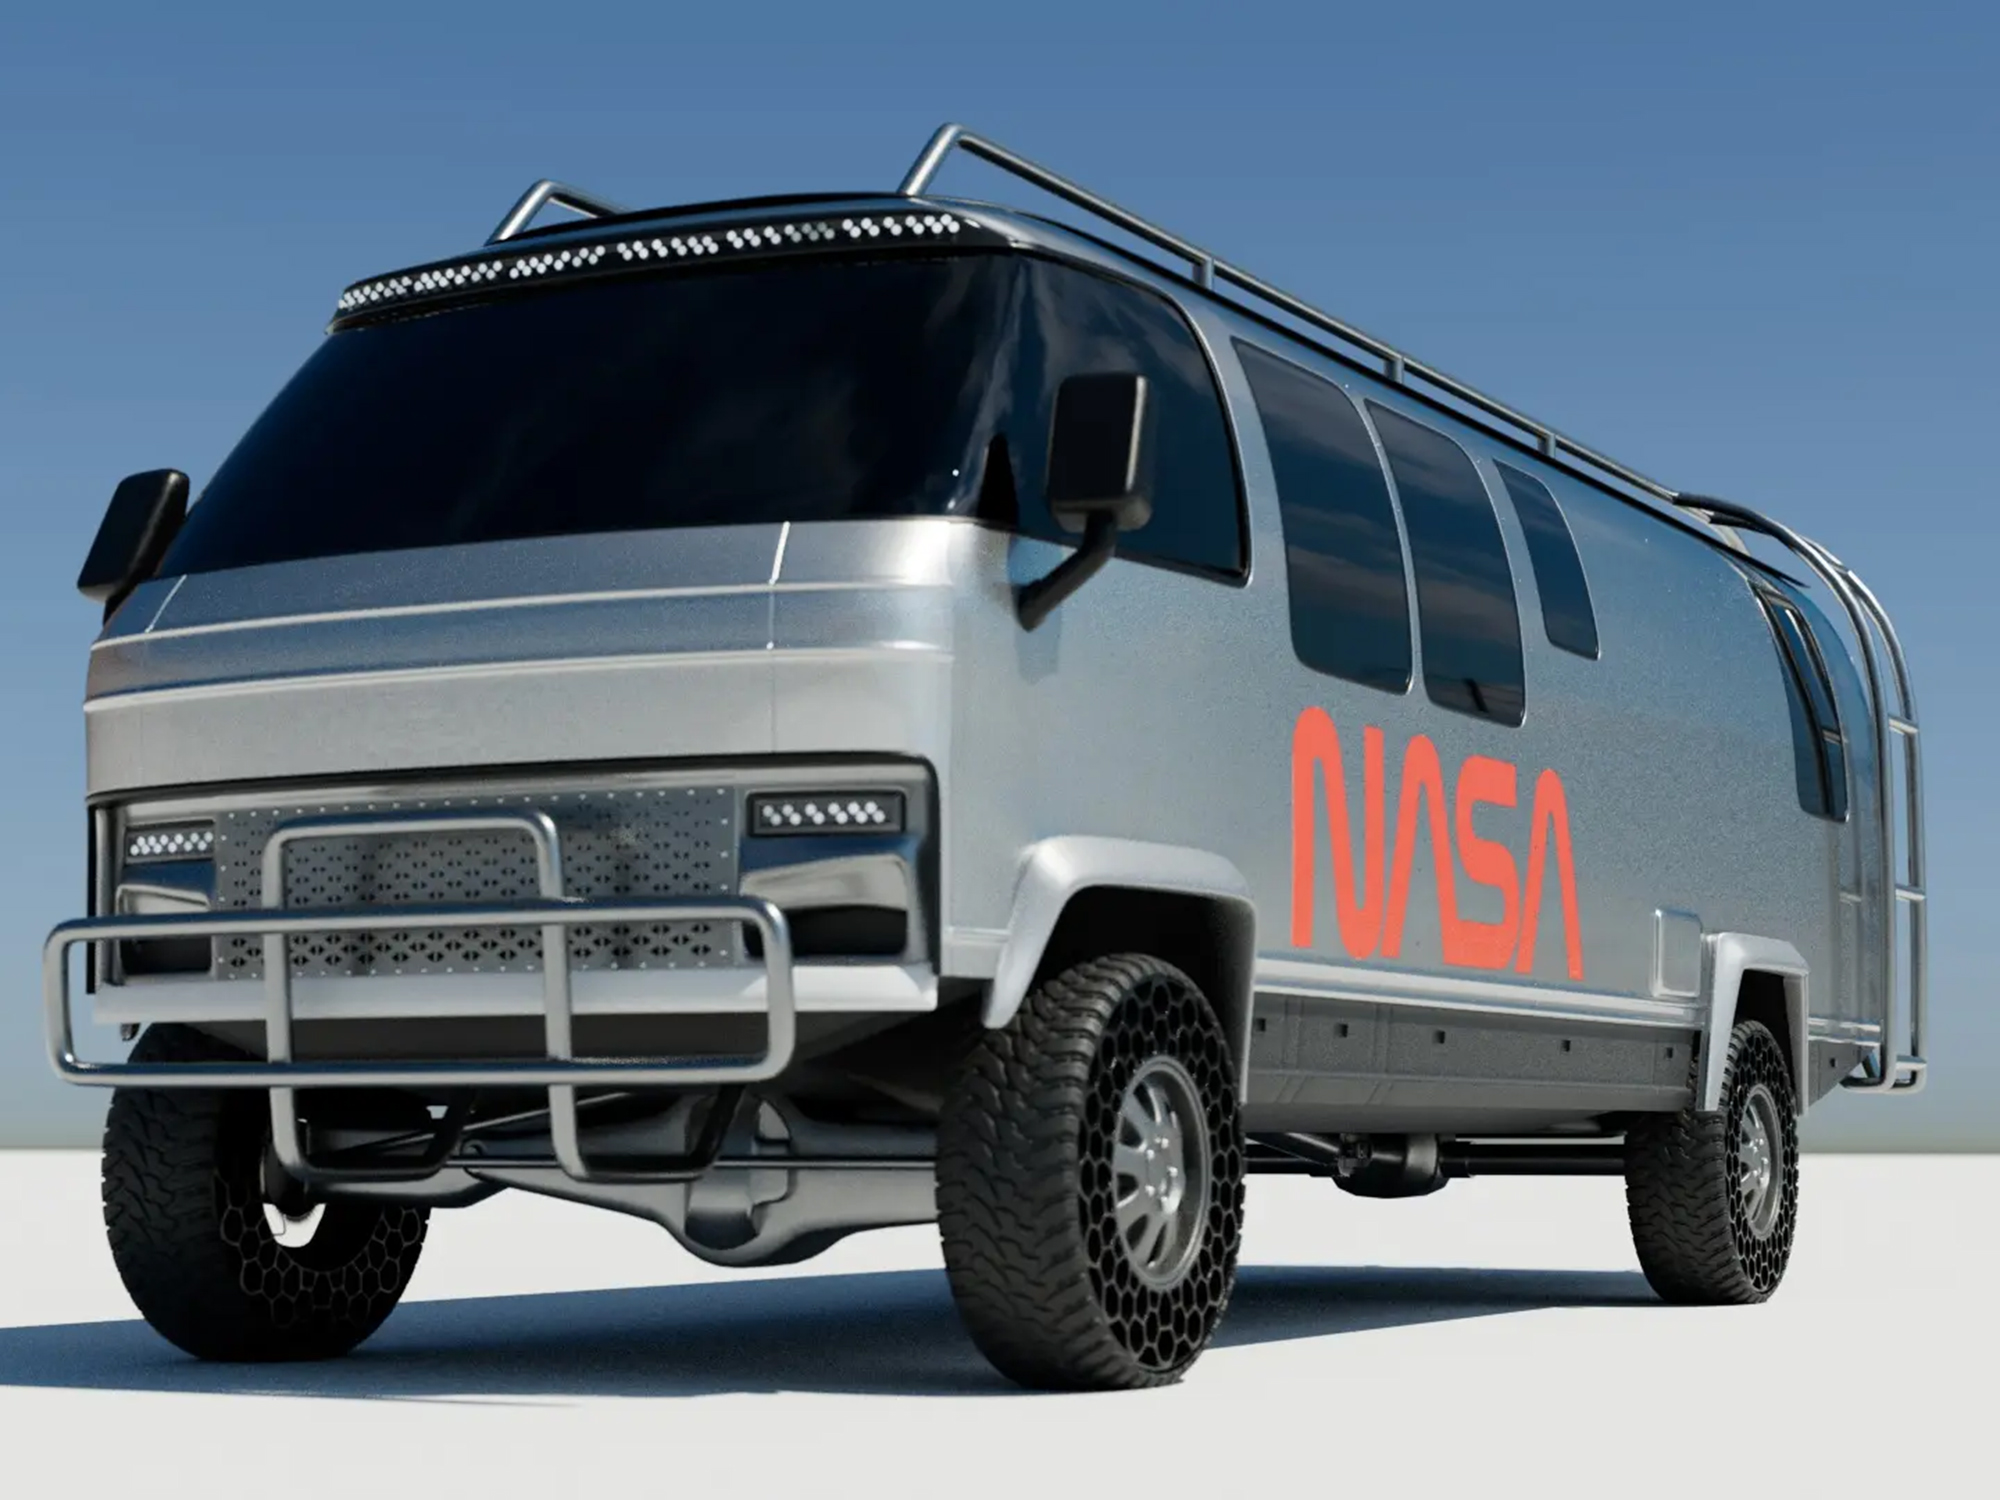 The sleek, shiny transport van NASA never built